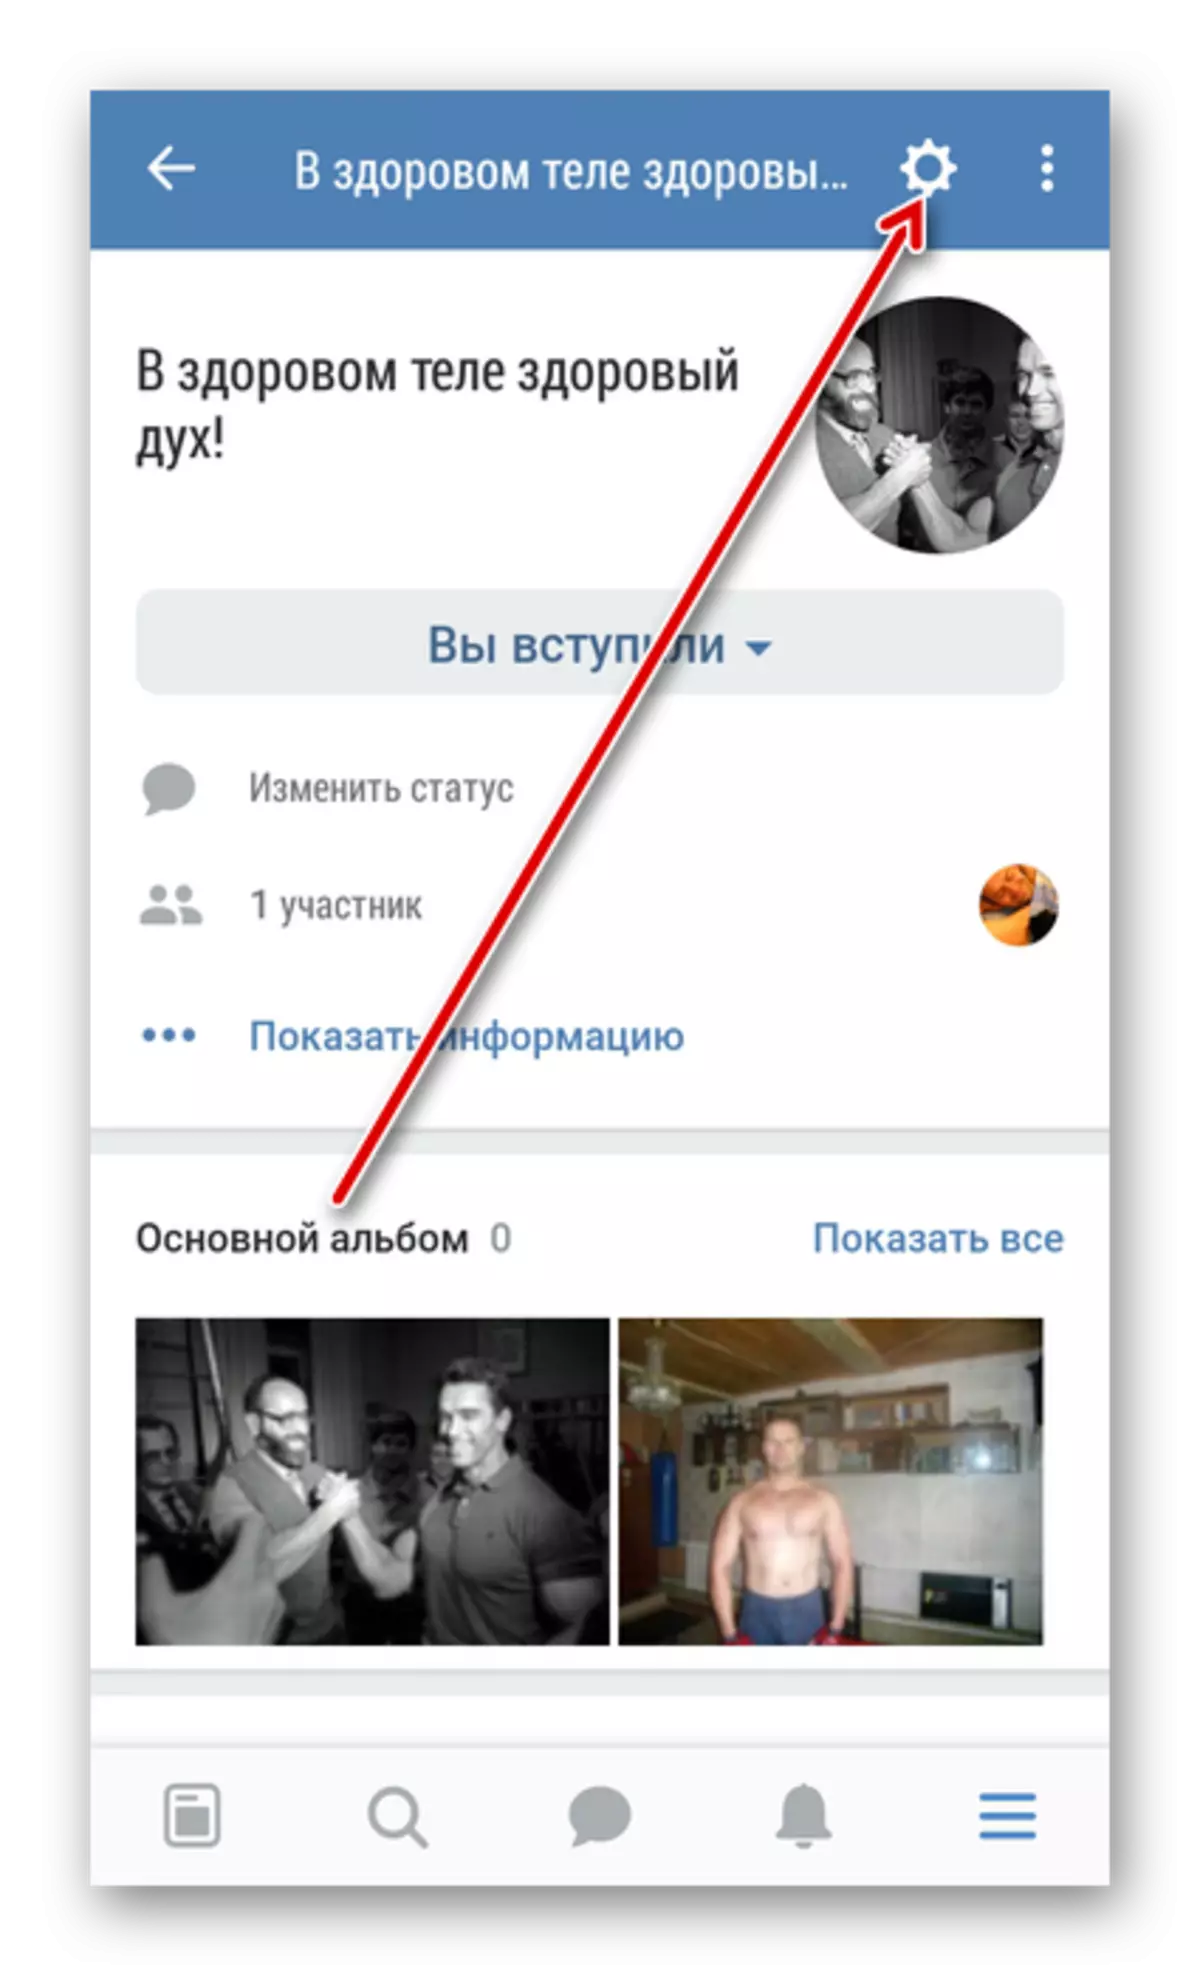 Vkontakte ನಲ್ಲಿ ನಿಮ್ಮ ಗುಂಪಿನ ಸೆಟ್ಟಿಂಗ್ಗಳಿಗೆ ಲಾಗ್ ಇನ್ ಮಾಡಿ